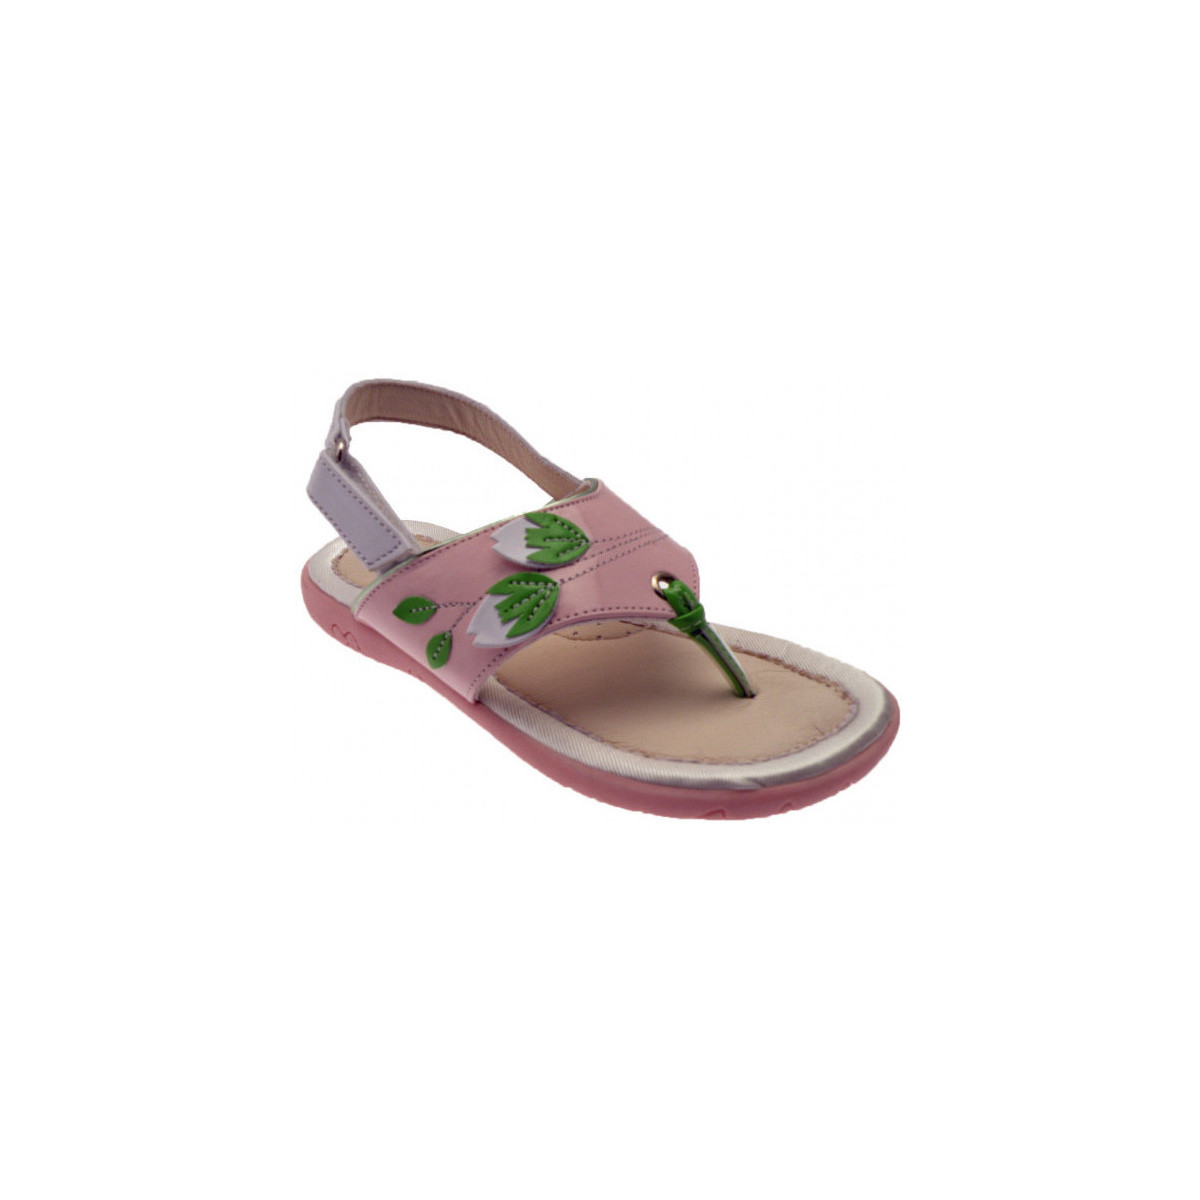 Schoenen Kinderen Sneakers Inblu INBLU sandalo infradito bambina Roze